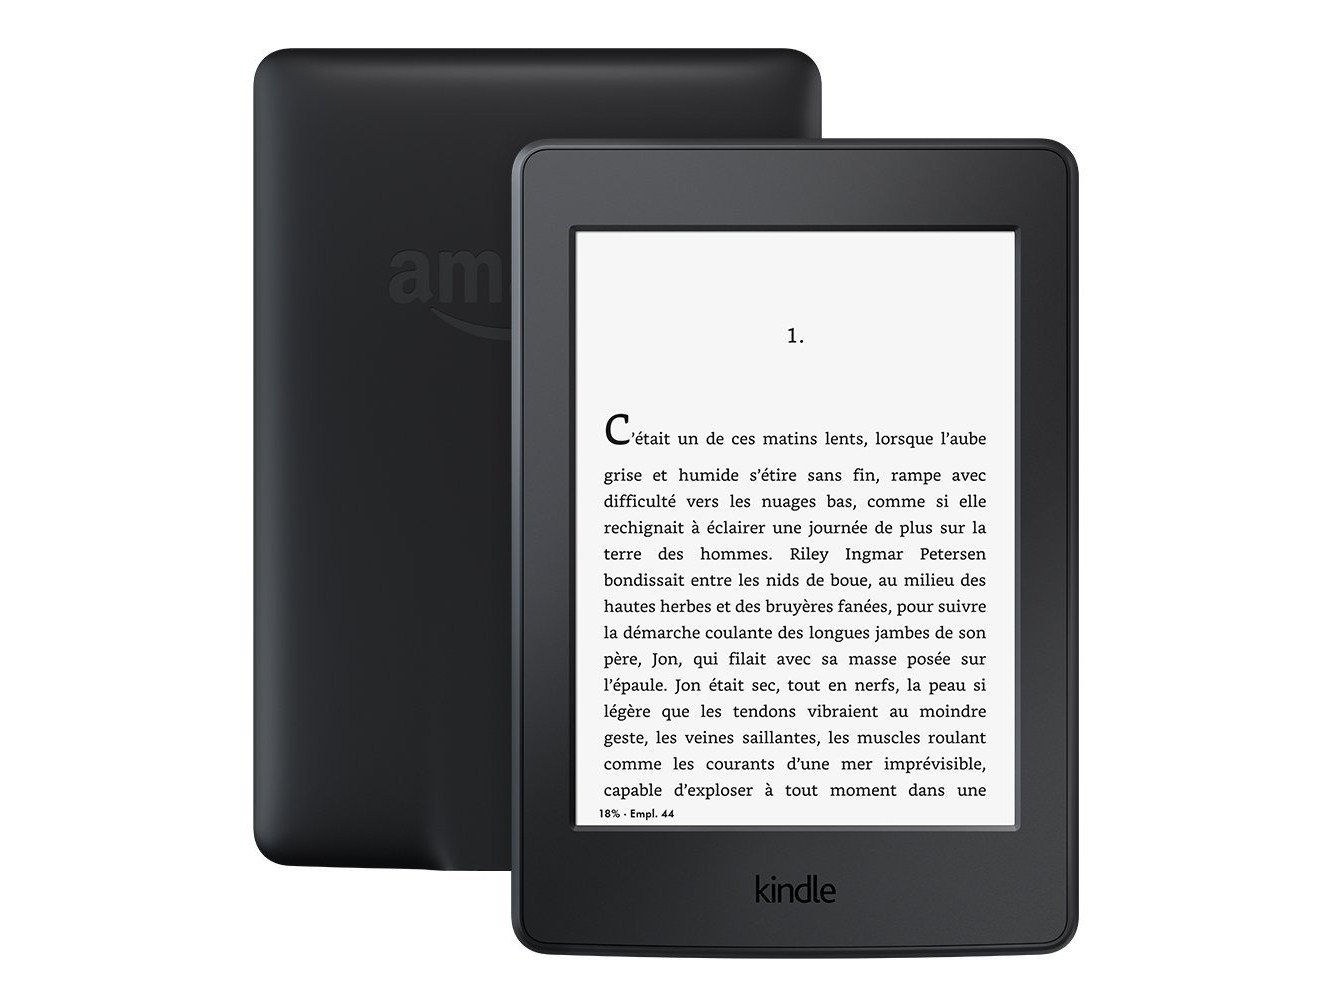 Amazon Prime Day - La Kindle Paperwhite à 110 €